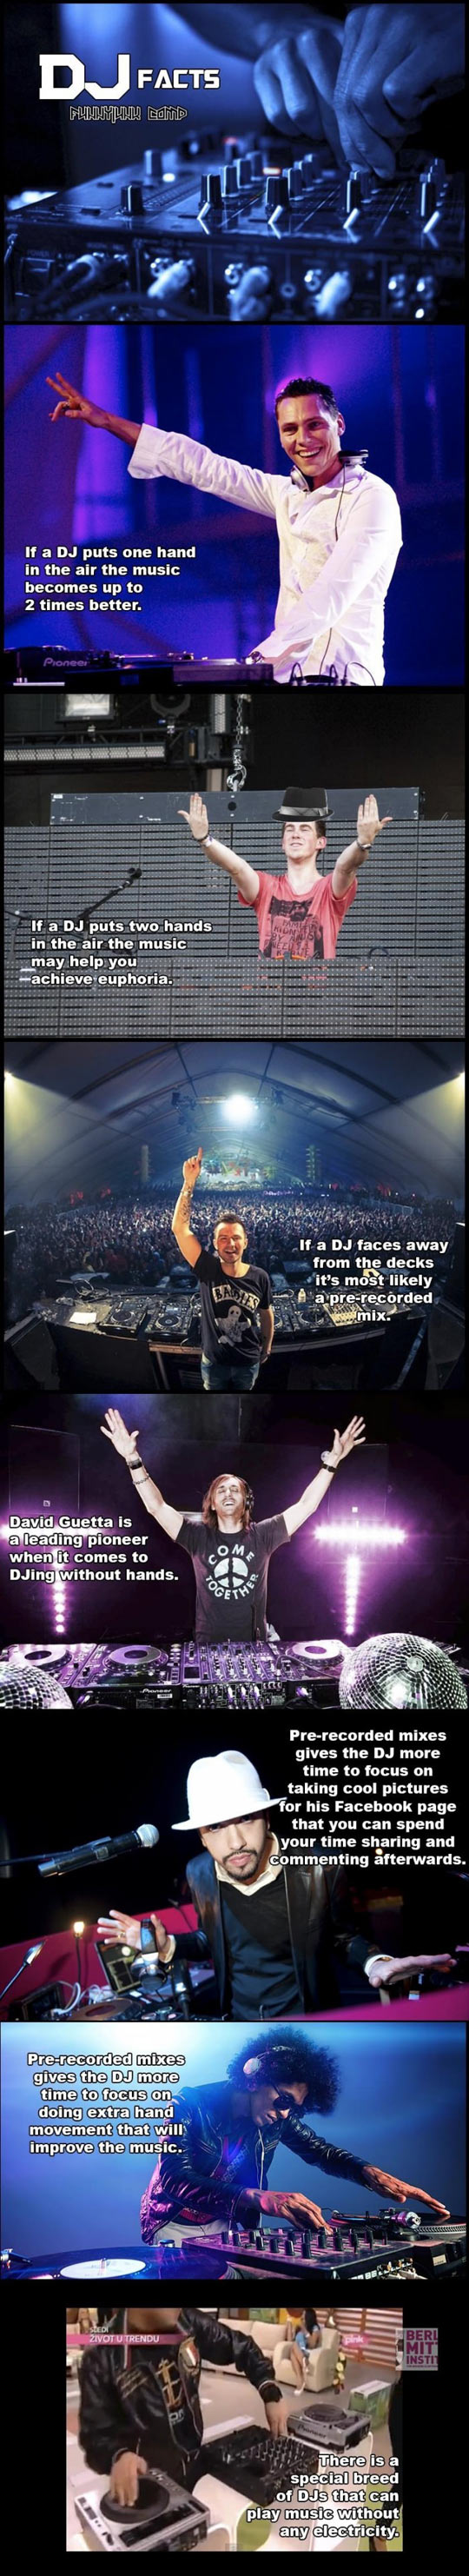 DJ Facts.